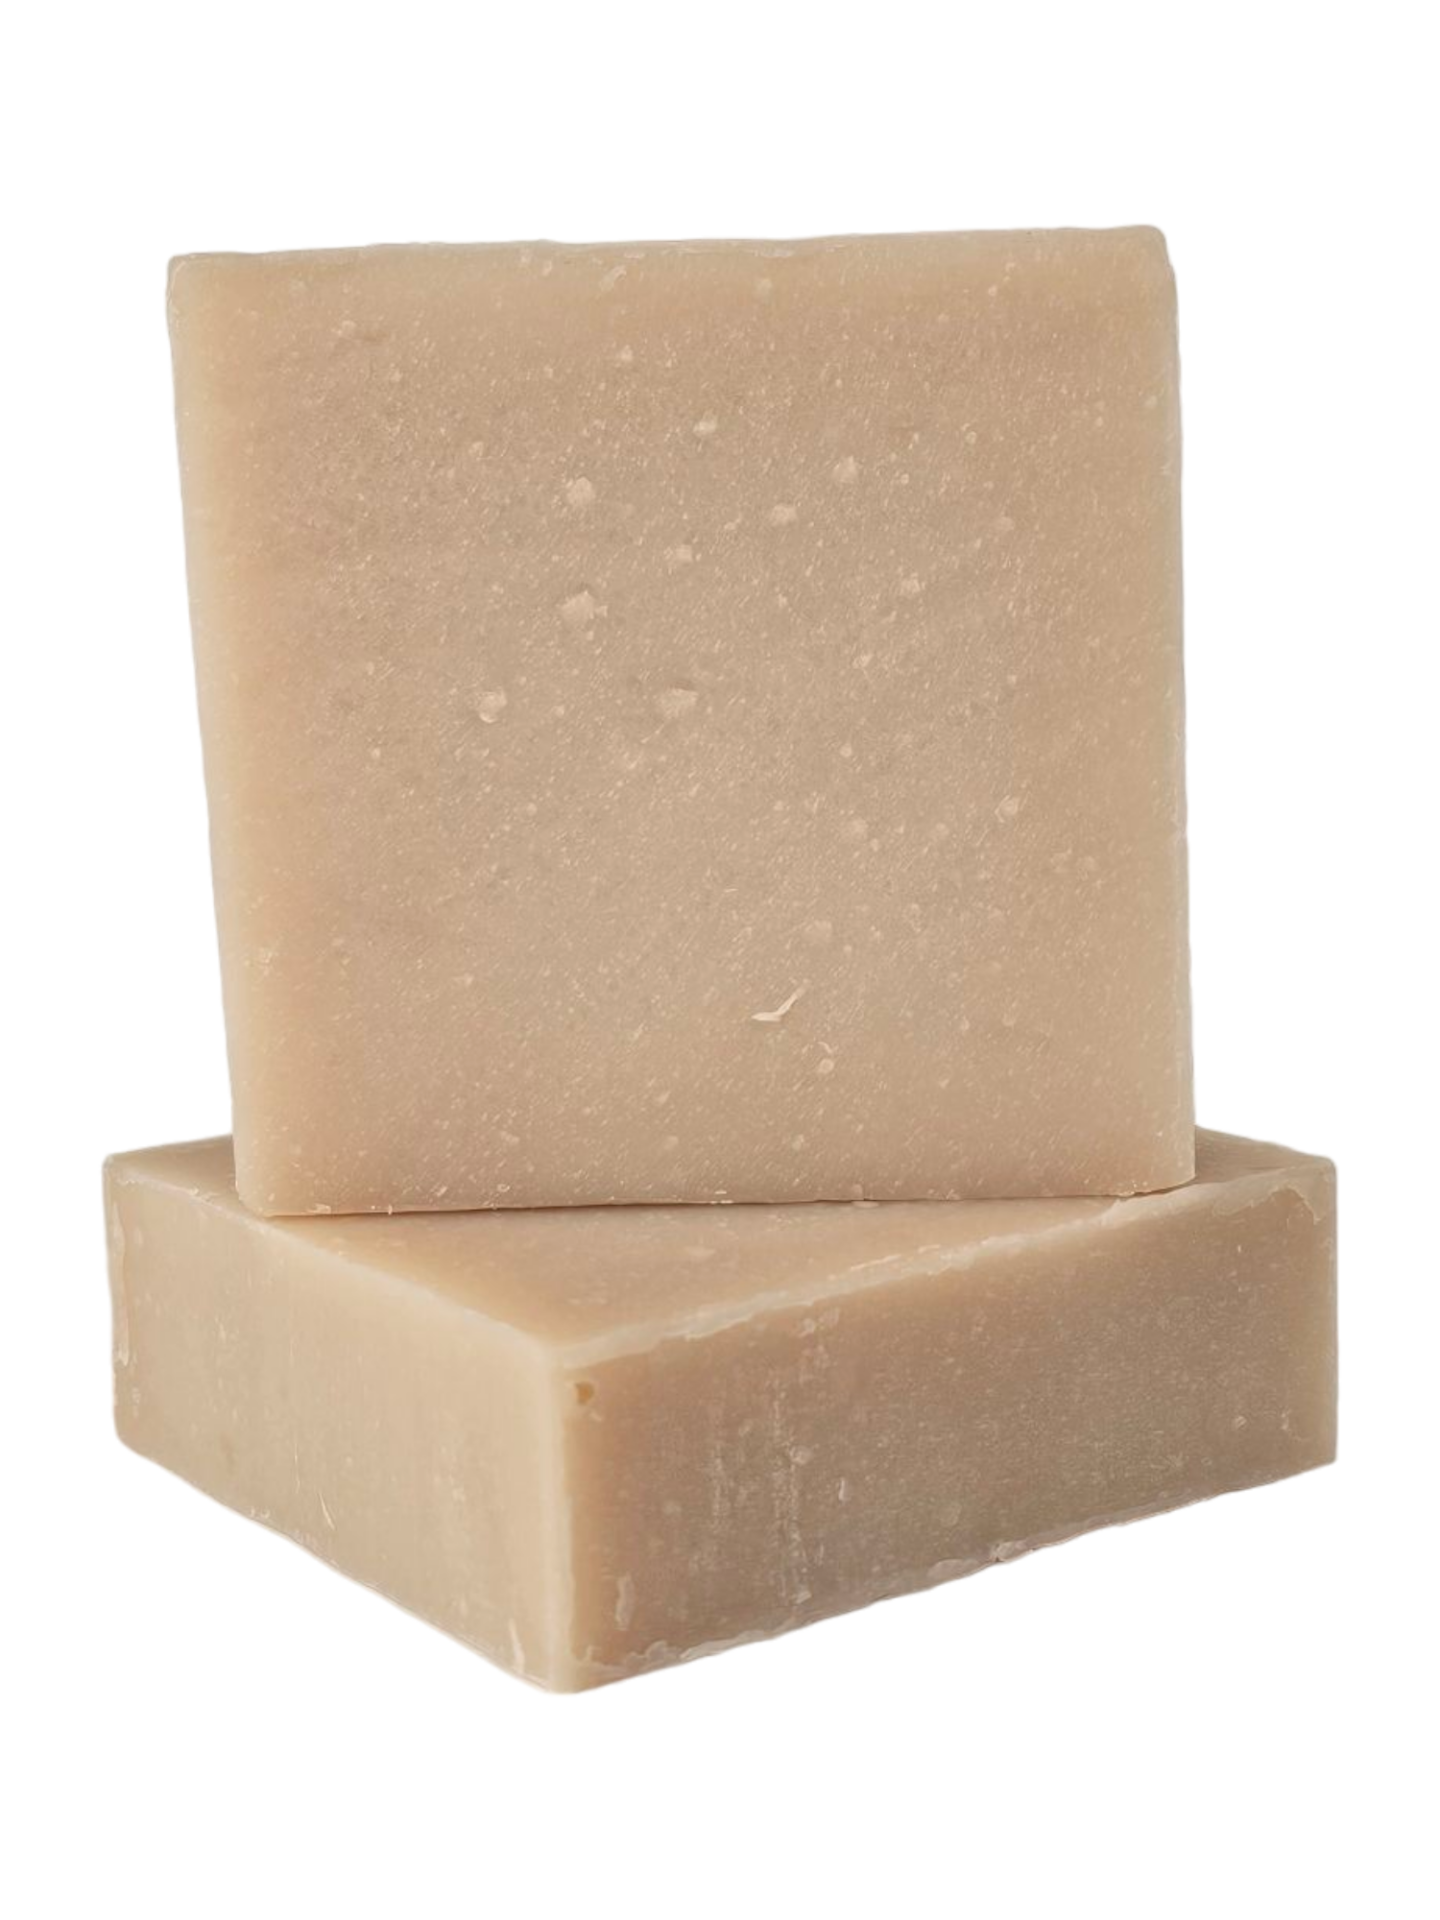 Coconut Almond Handmade Soap